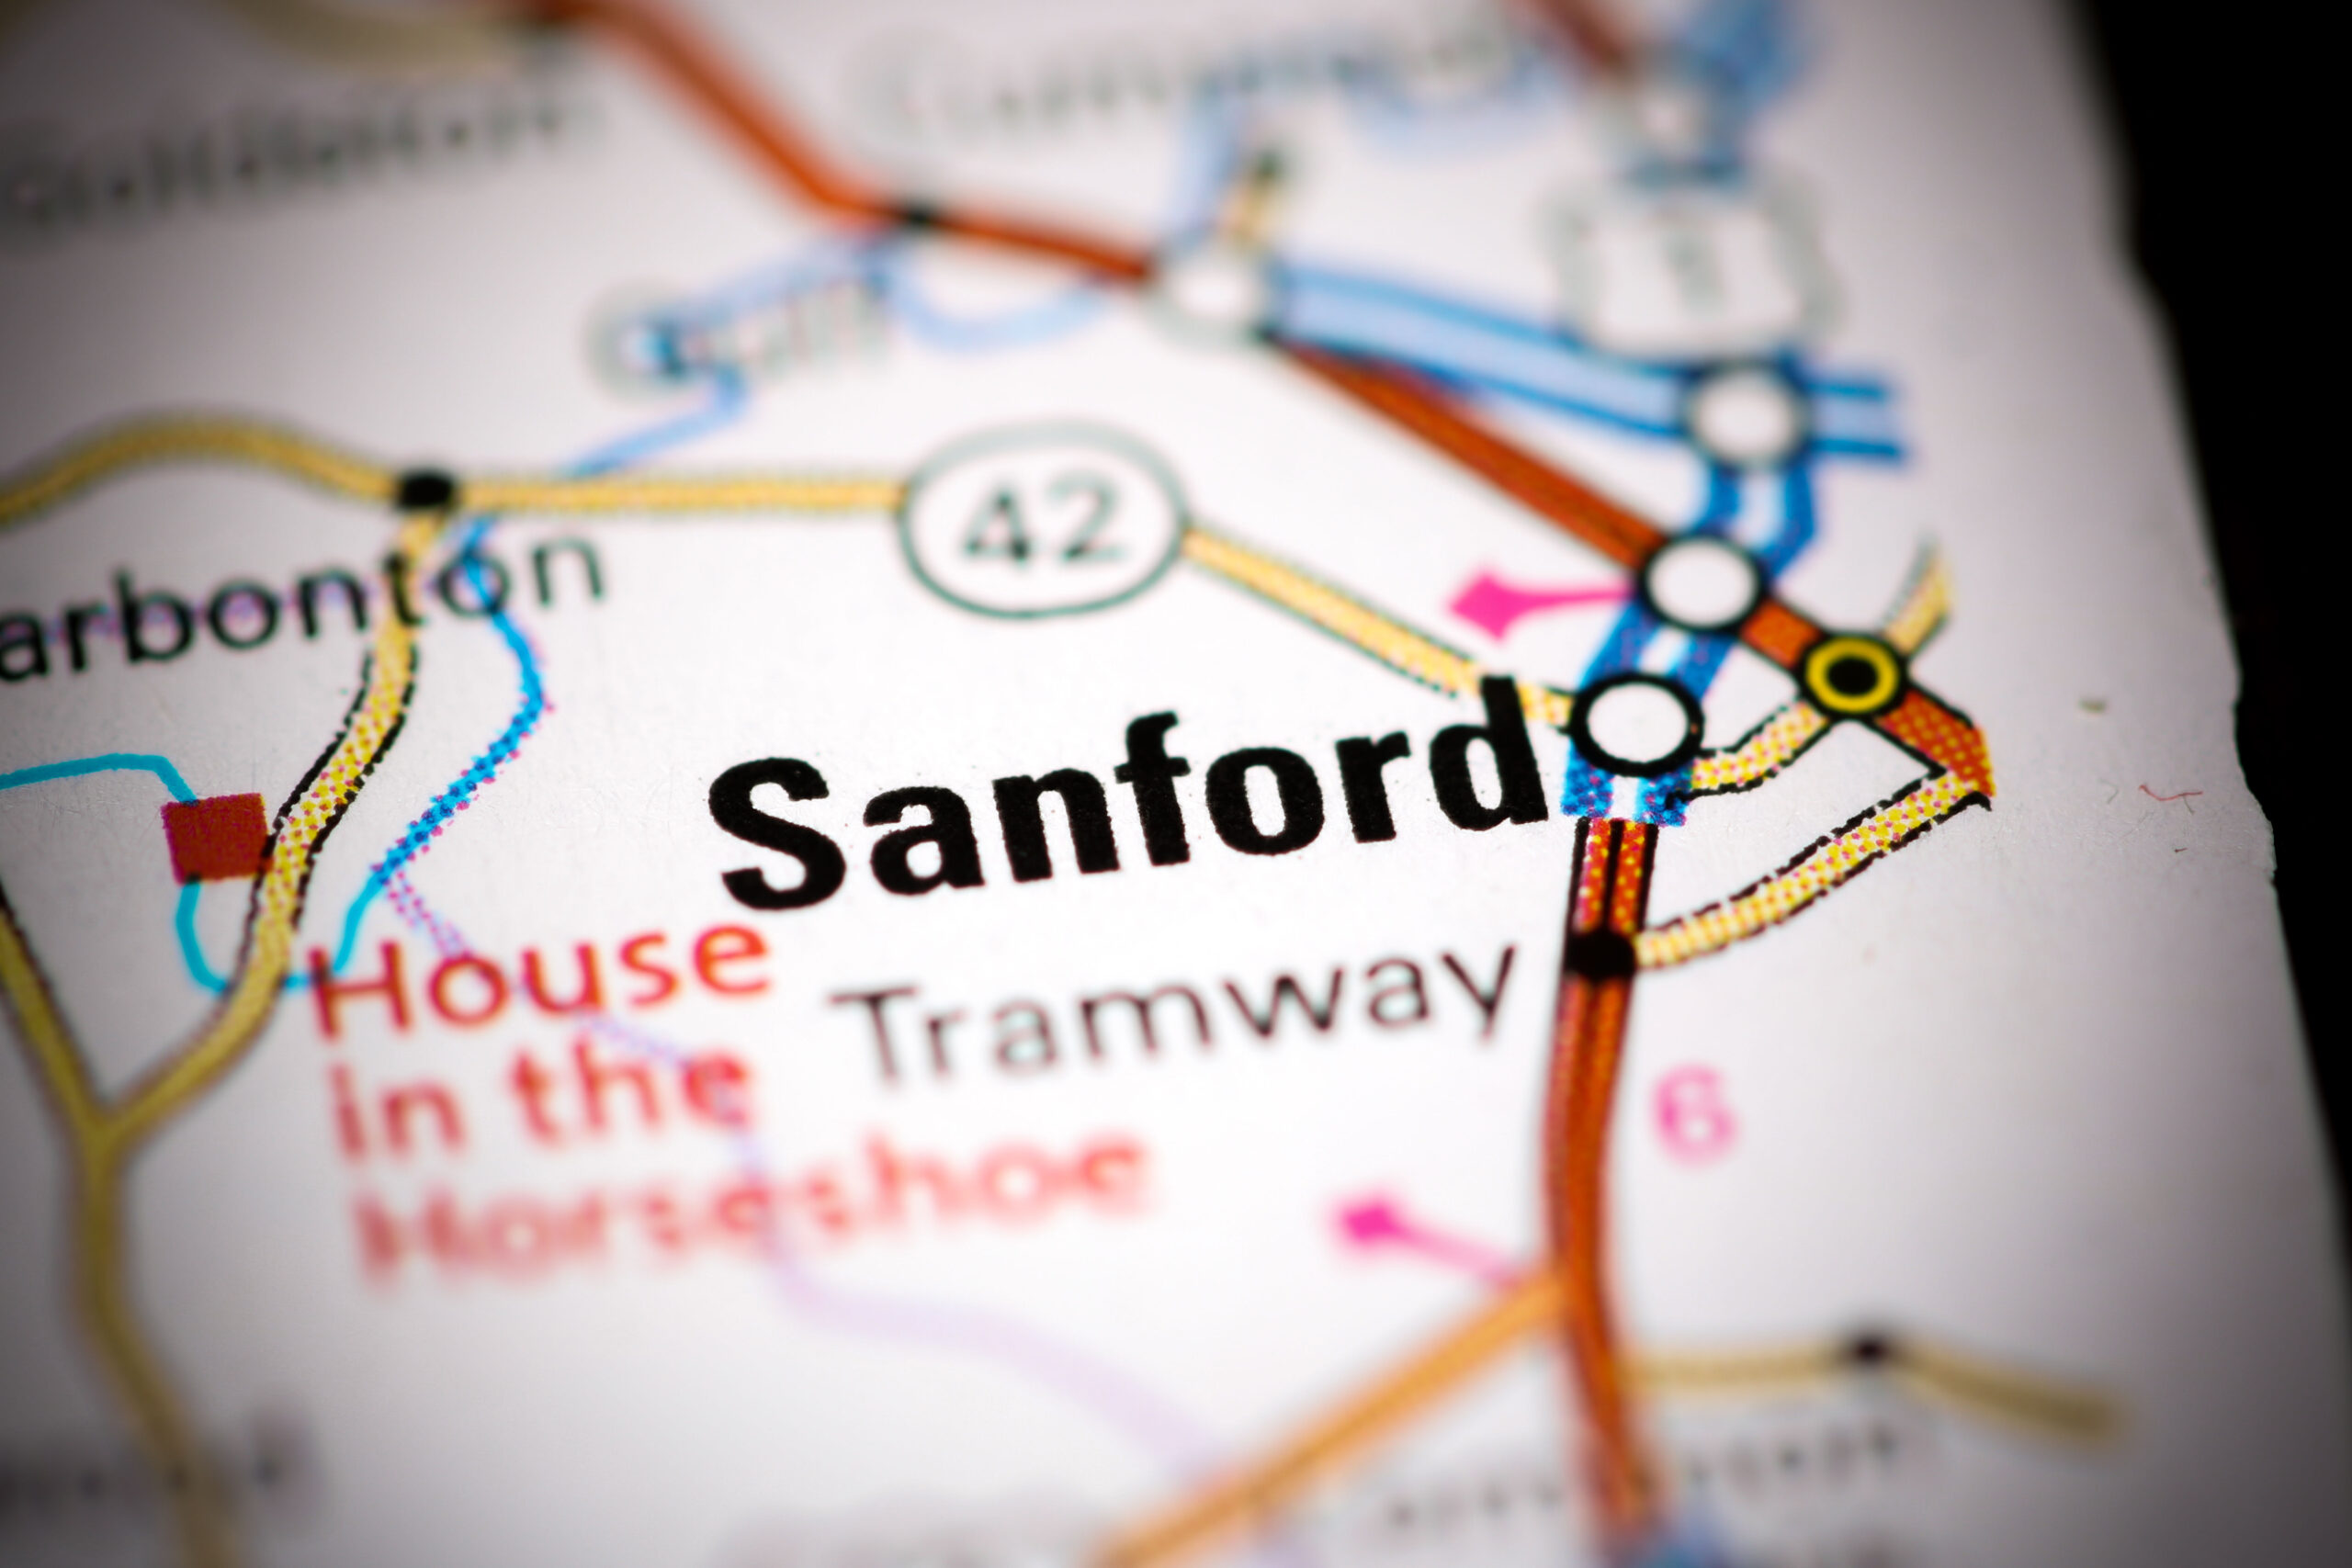 Map of Sanford, North Carolina